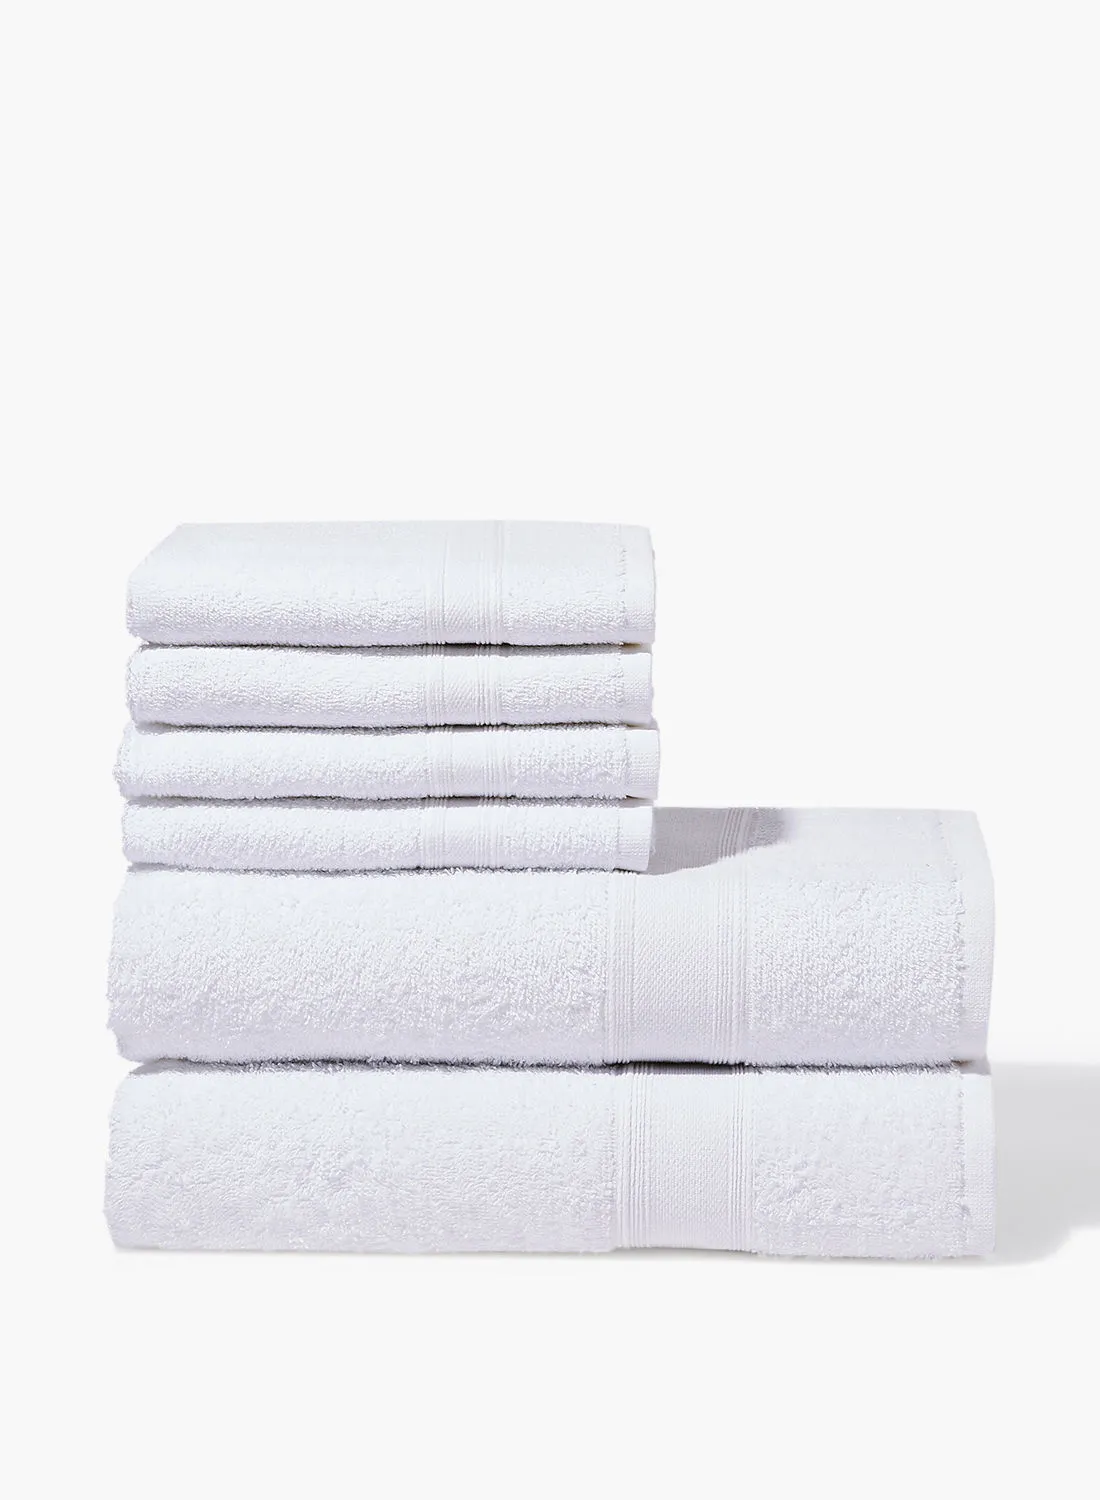 Amal 6 Piece Bathroom Towel Set - 400 GSM 100% Cotton Terry - 4 Hand Towel - 2 Bath Towel - White Color -Quick Dry - Super Absorbent